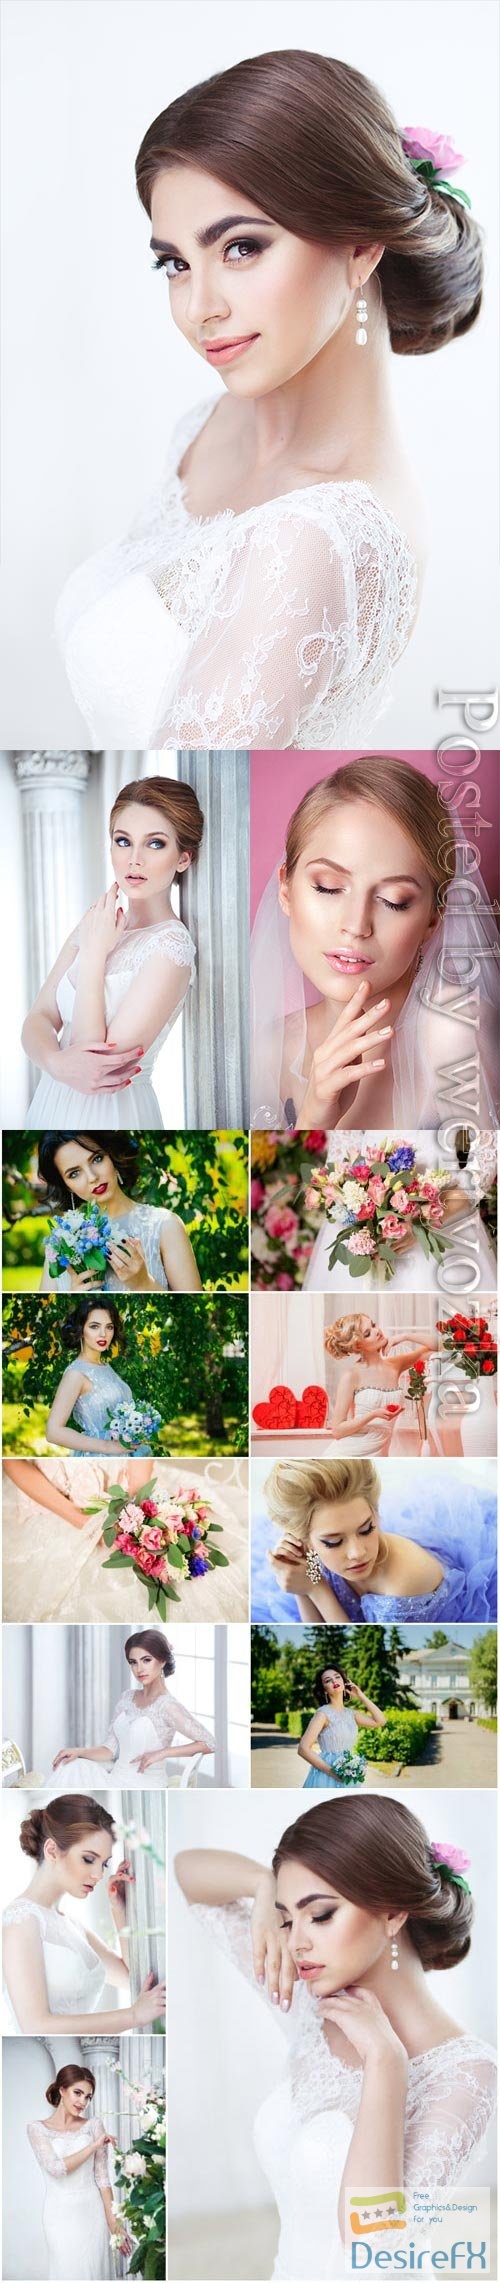 Beautiful brides stock photo